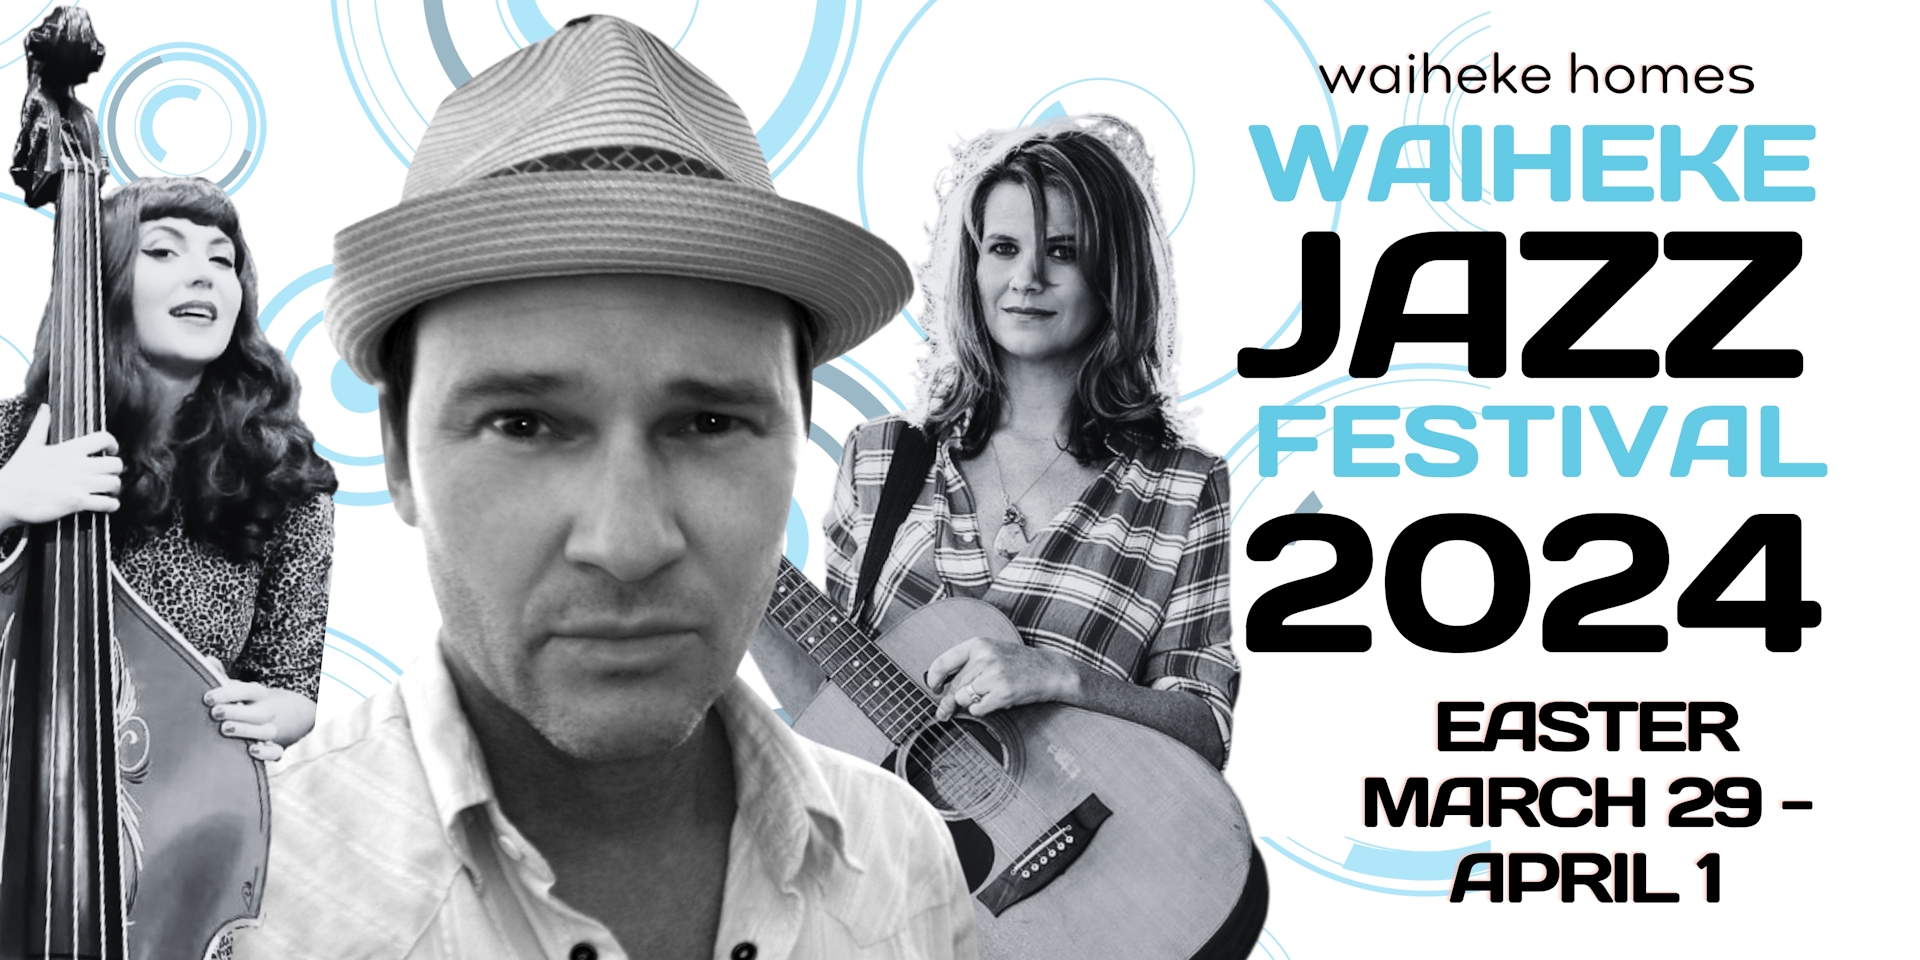 Waiheke Homes Waiheke Jazz Festival